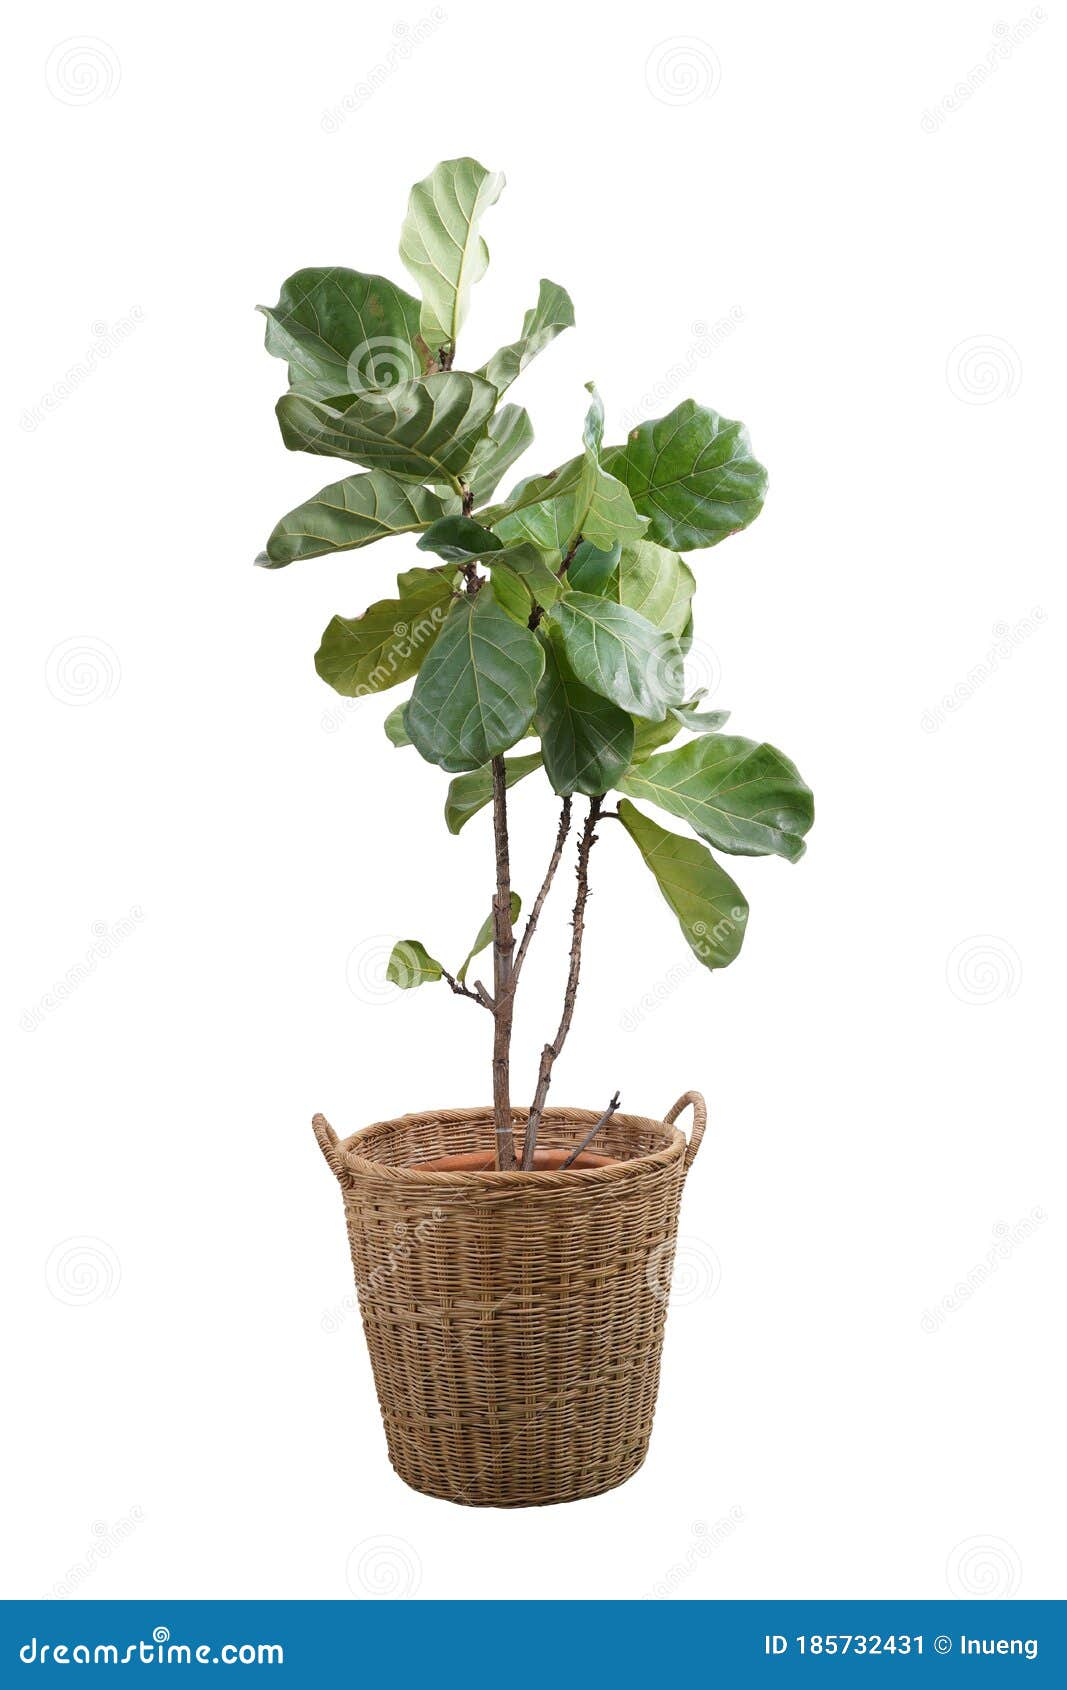 green leaves of fiddle-leaf fig tree ficus lyrata. fiddle leaf fig tree in wicker basket  on white background.